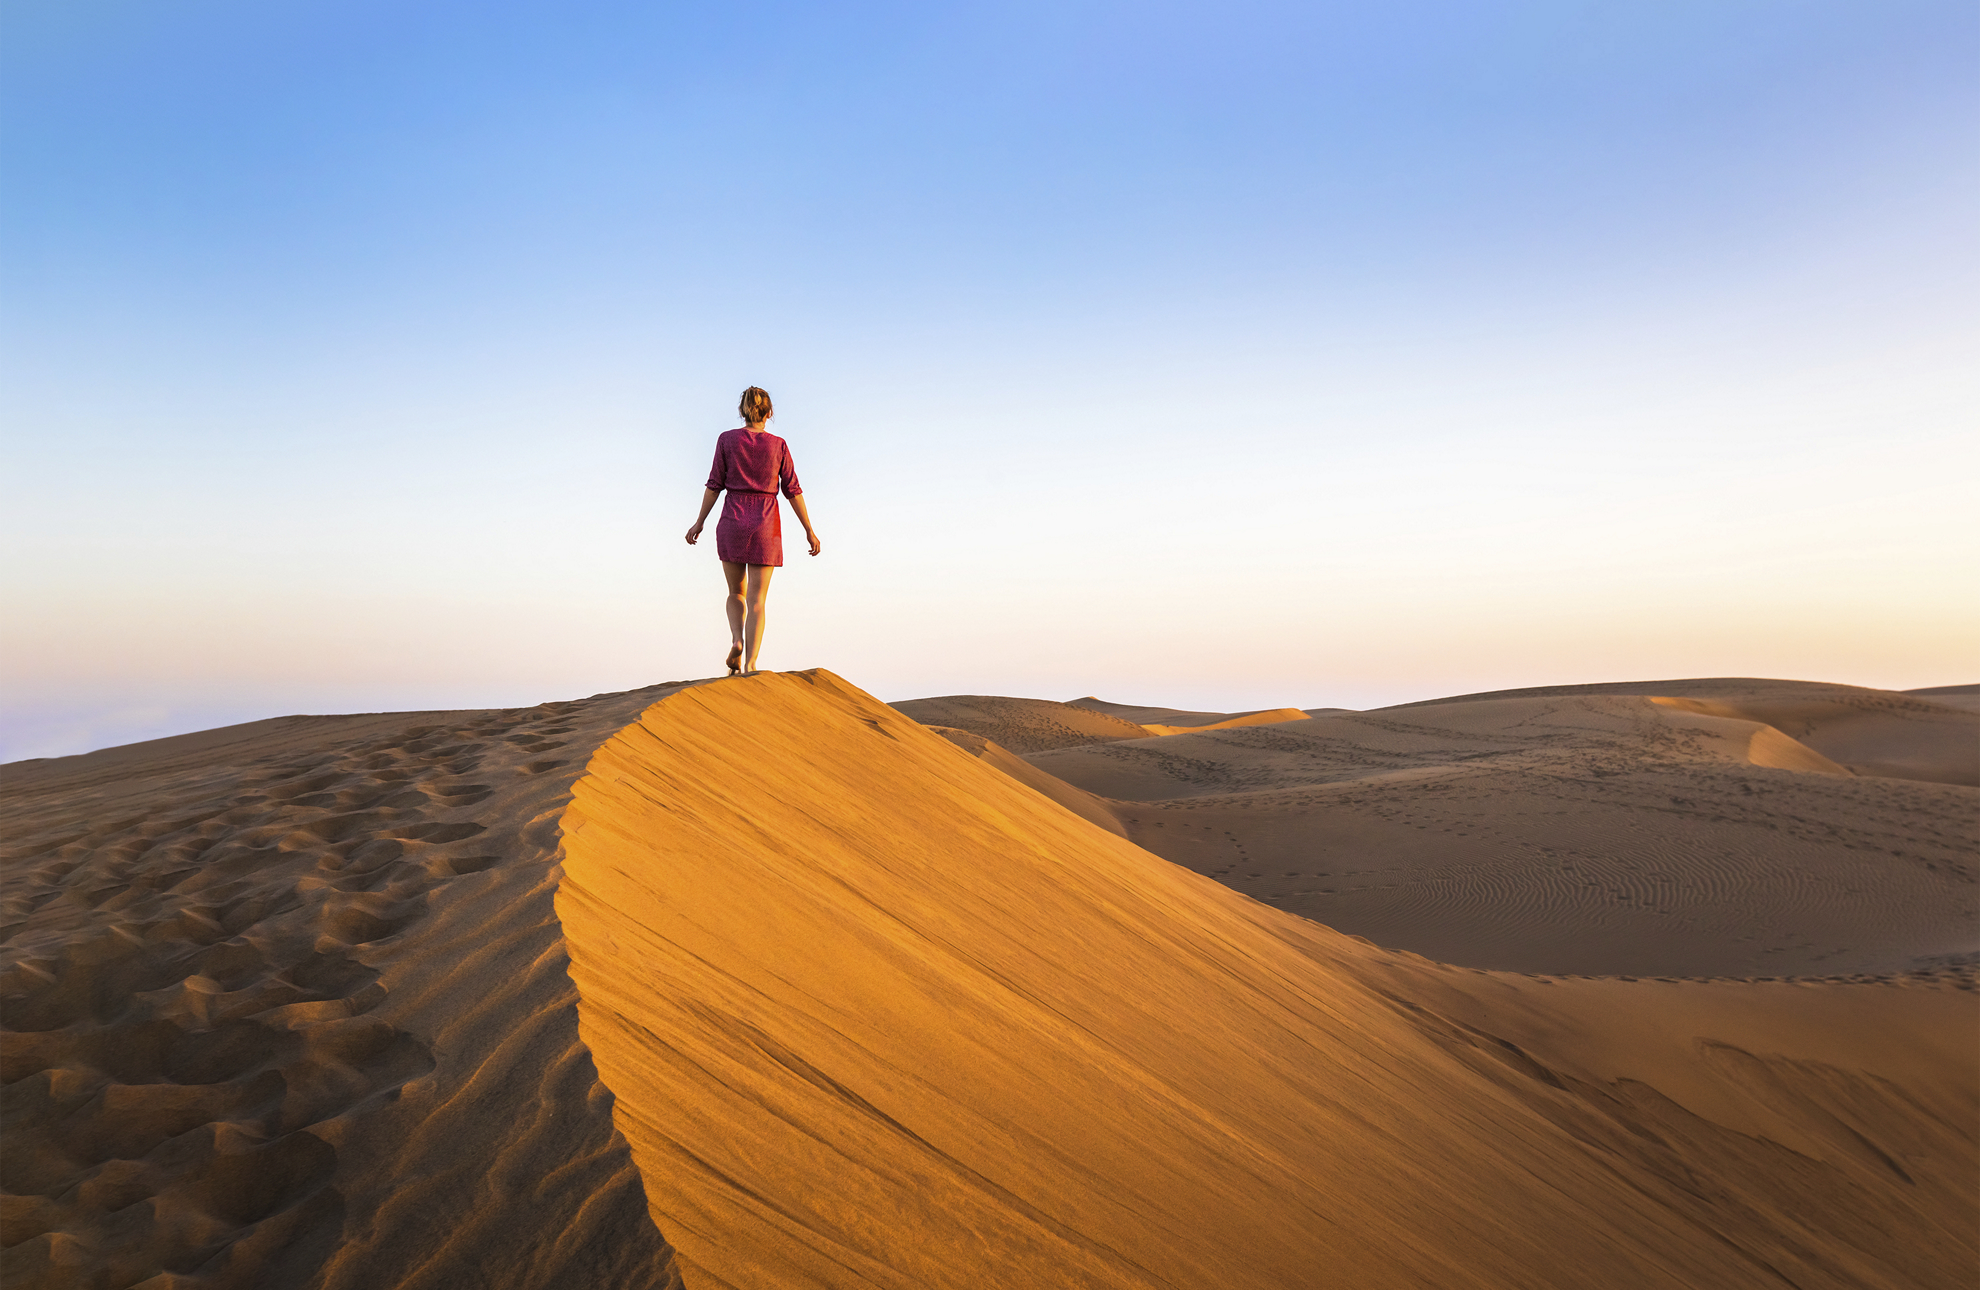 Girl walking on sand dunes in arid desert at sunset and wearing dress, scenic landscape of Sahara or Middle East